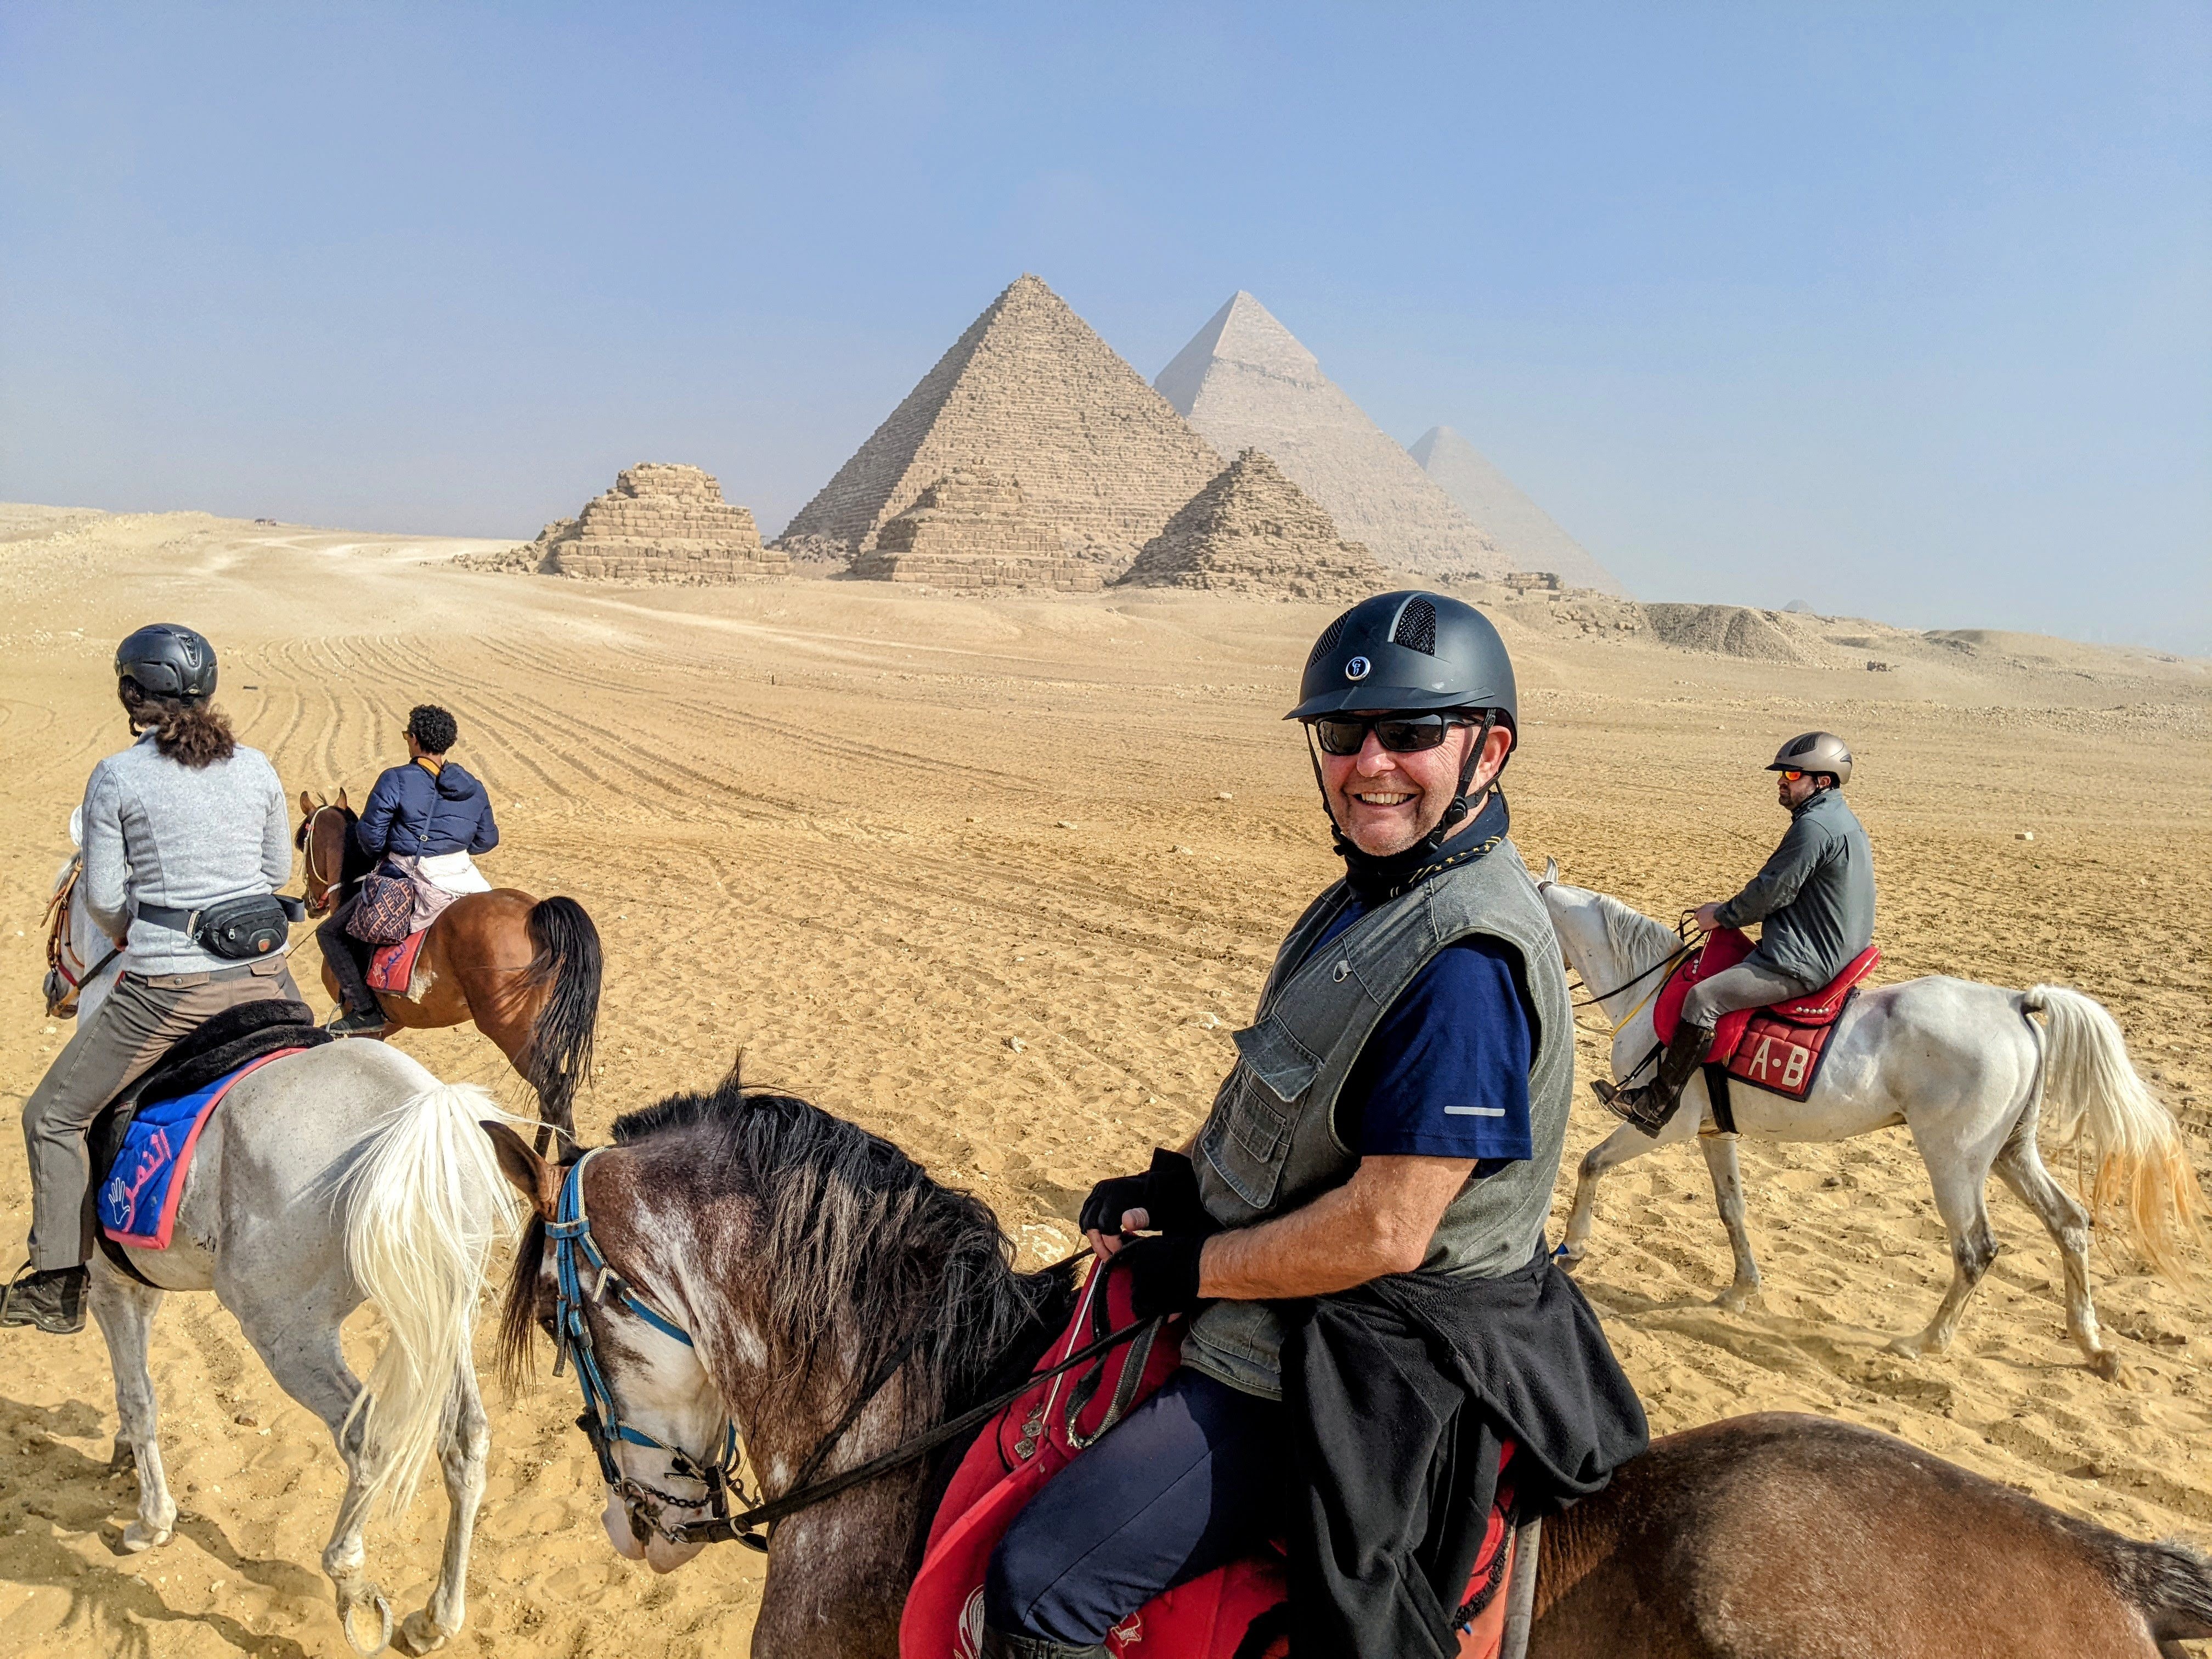 horse-riding-tour-cairo-pyramids-giza-egypt-8901.jpg